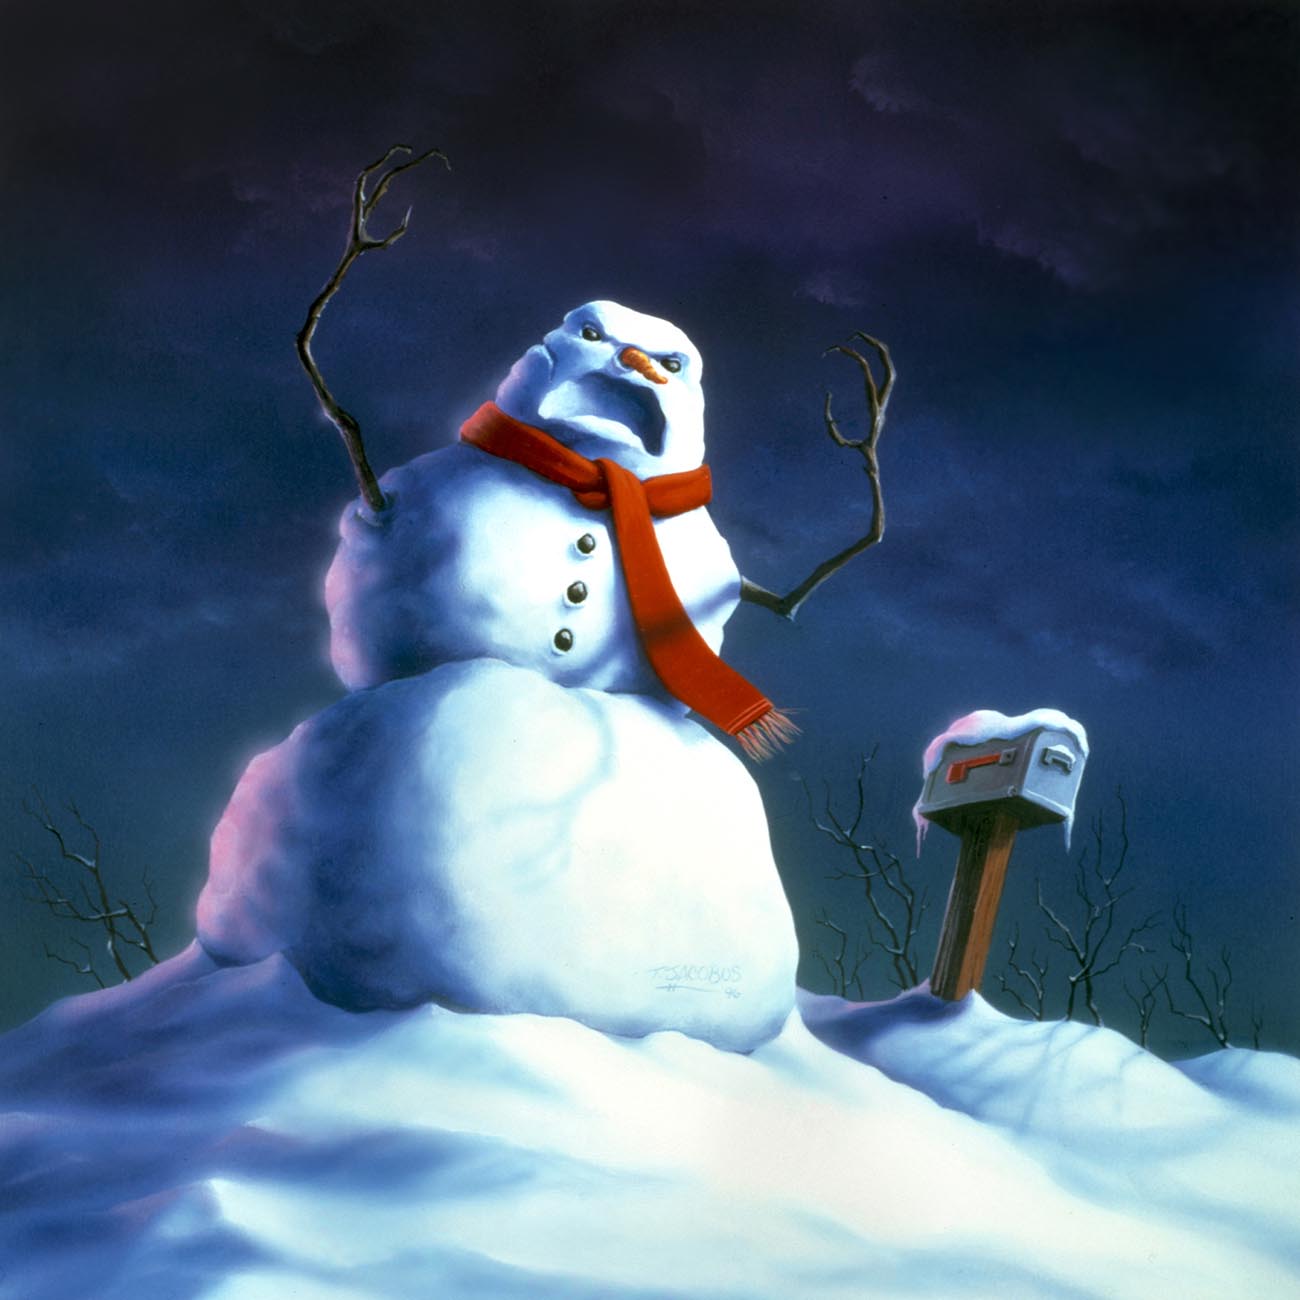 51 – Beware, the Snowman